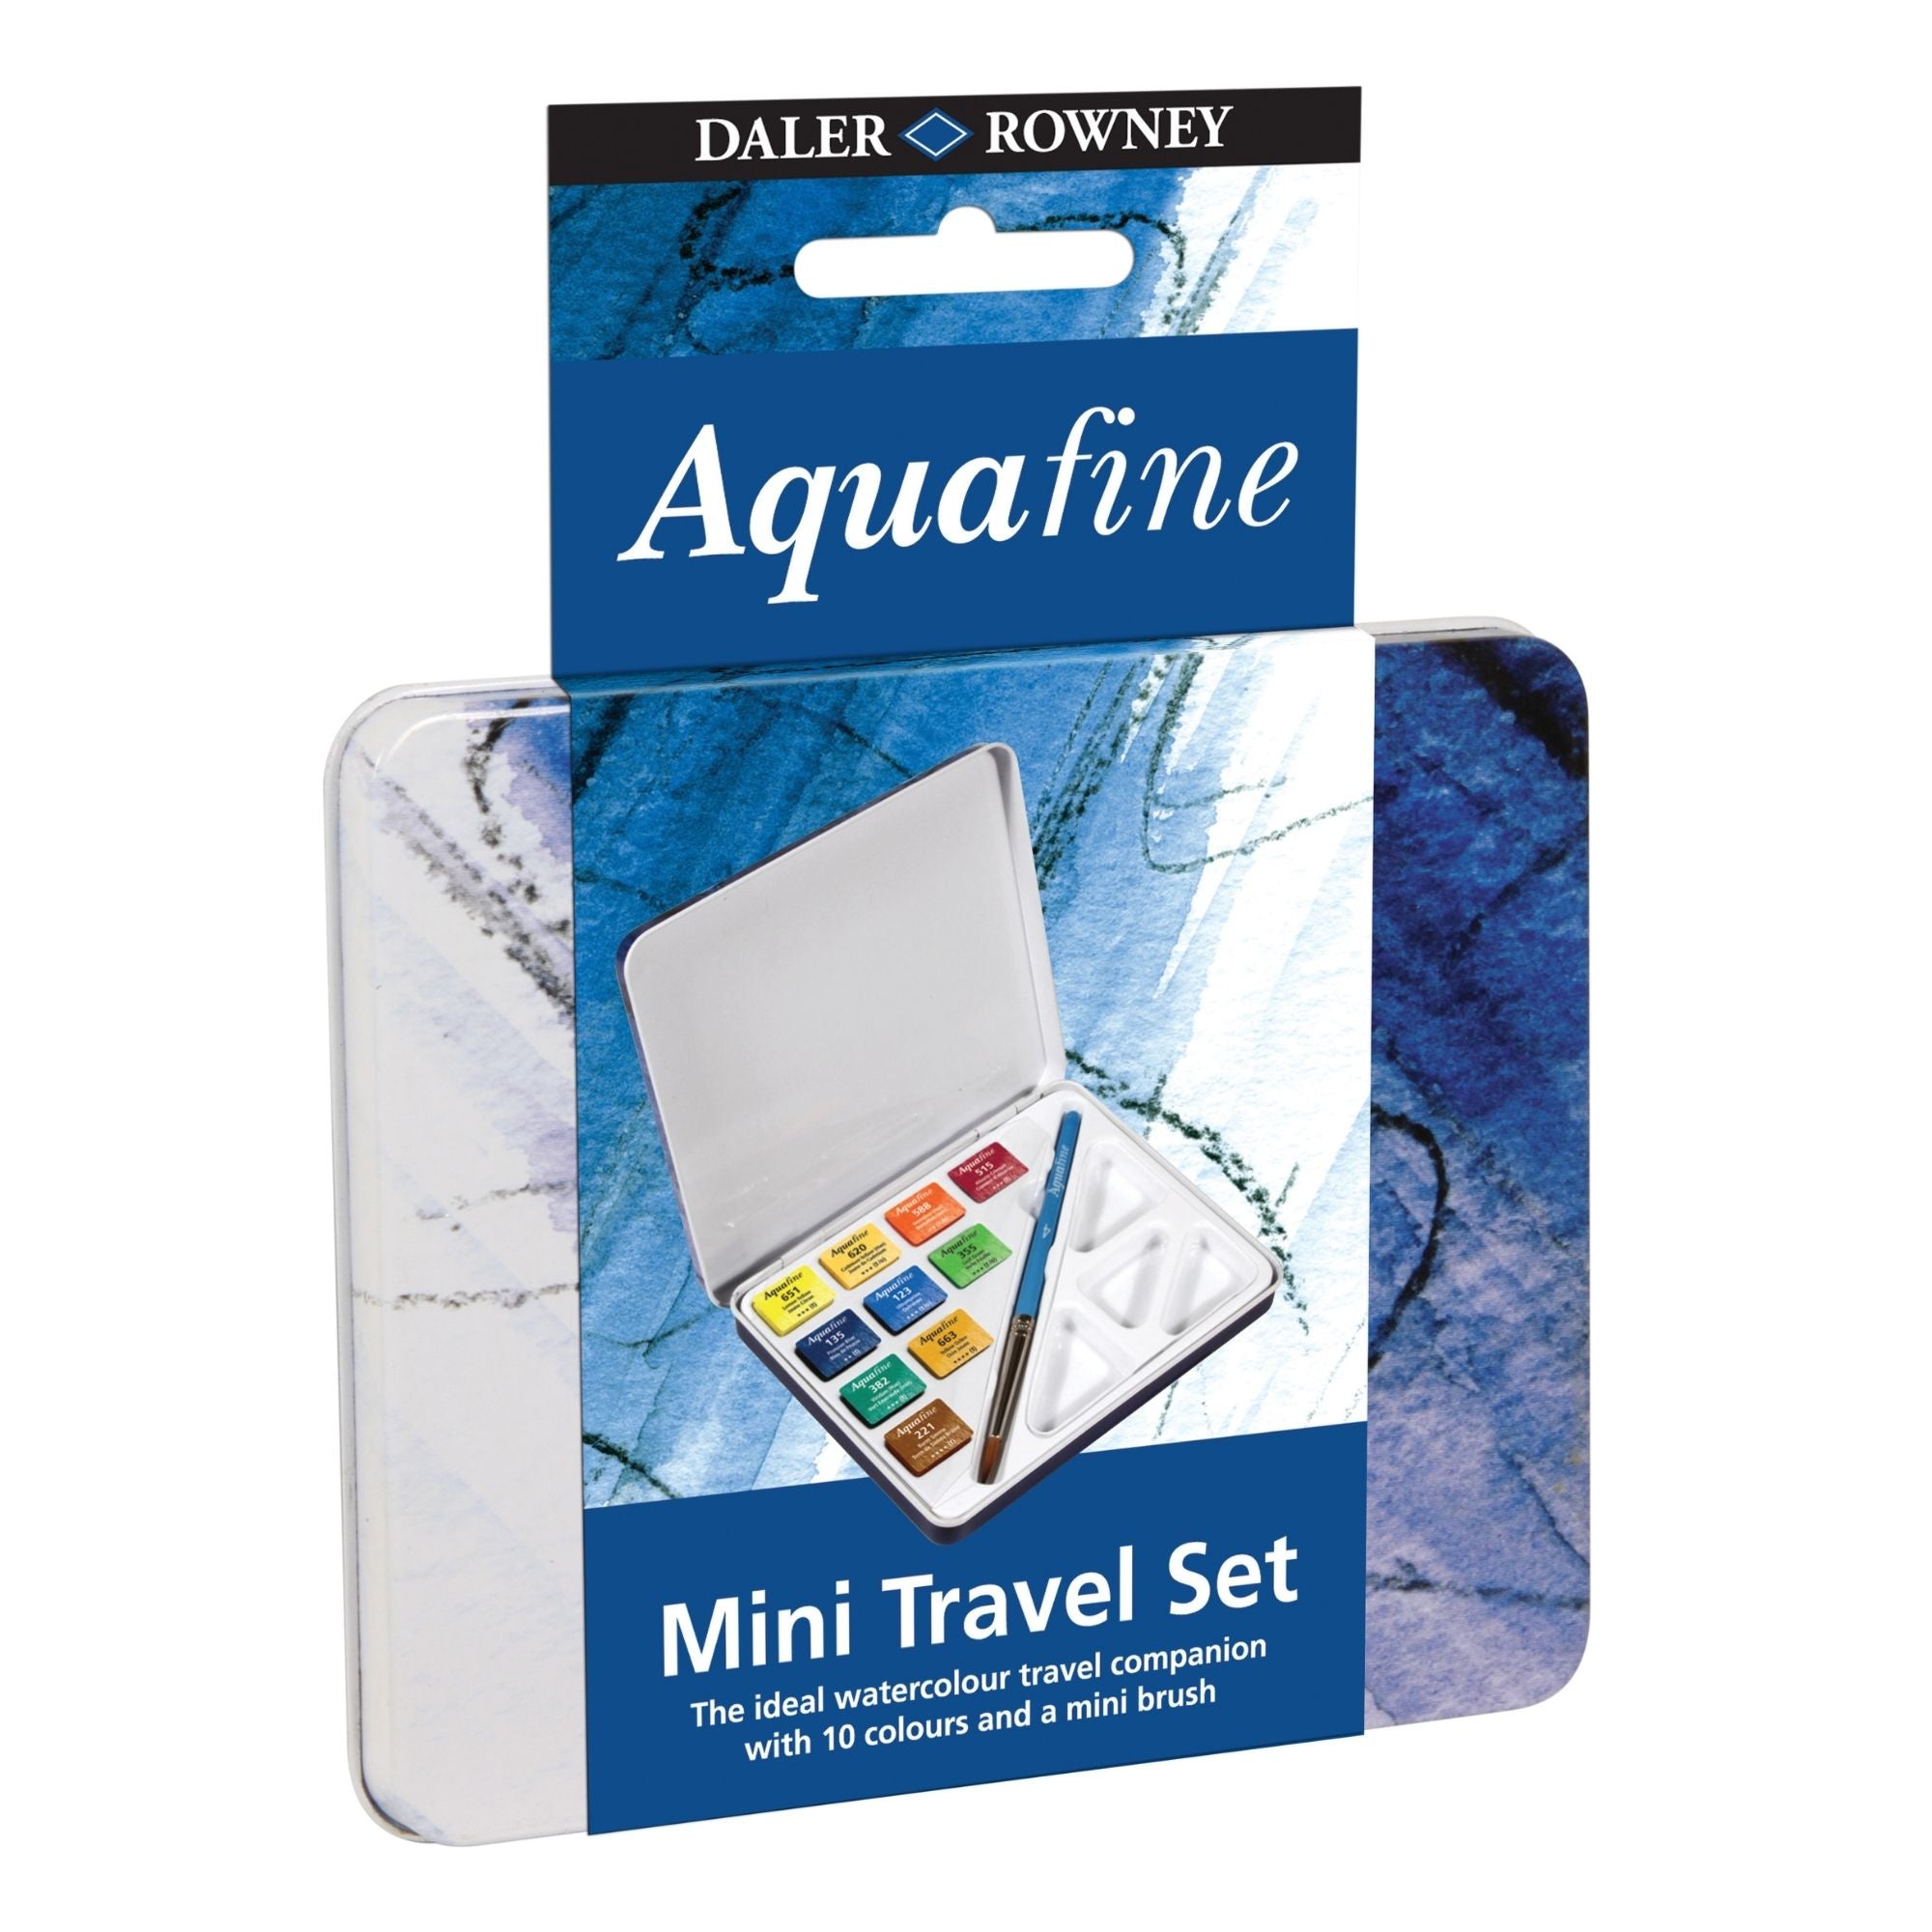 Daler-Rowney Aquafine Mini Travel Set - METAL TIN